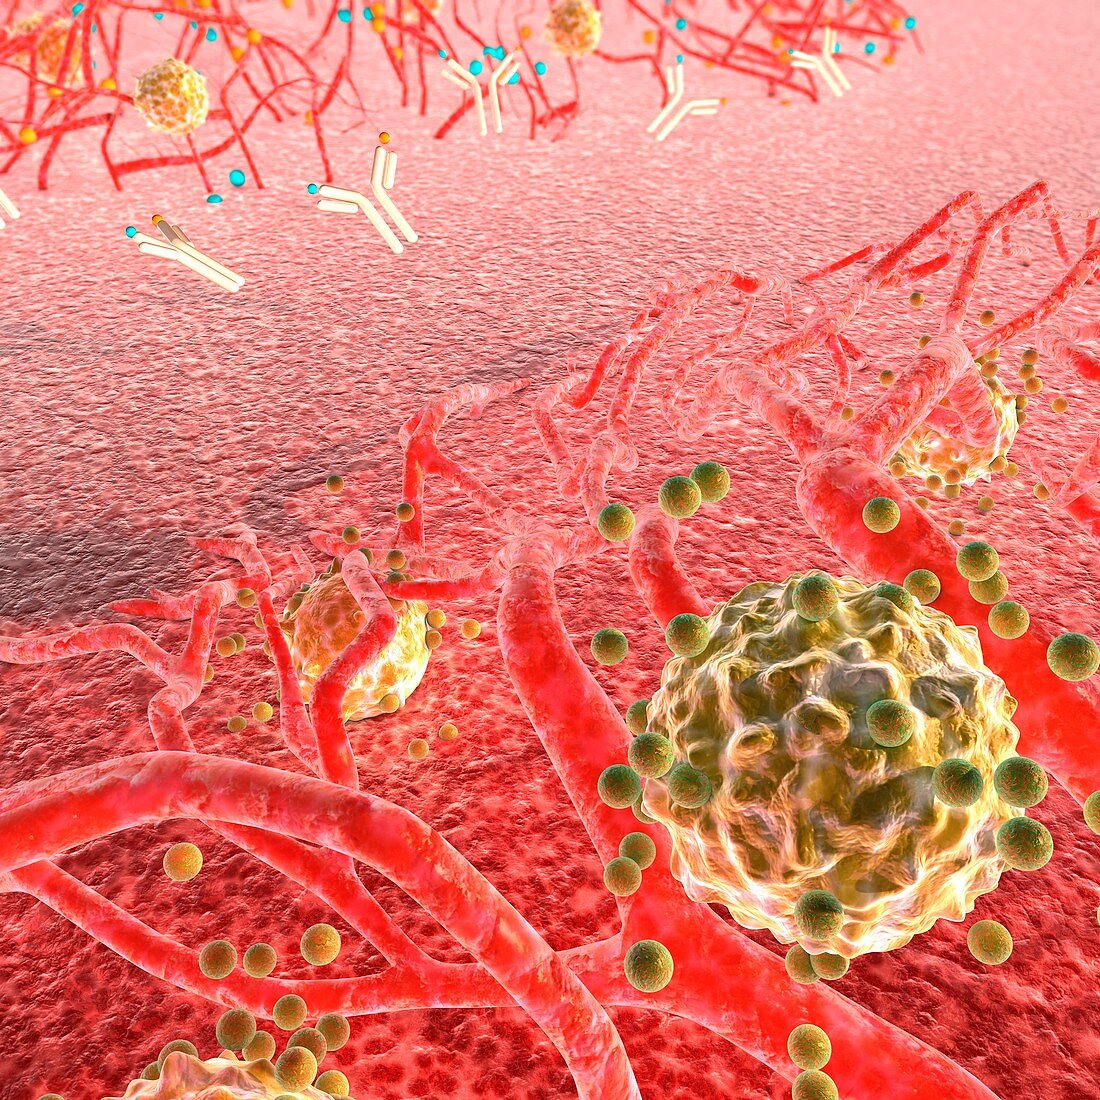 Antiangiogenic cancer treatment, illustration